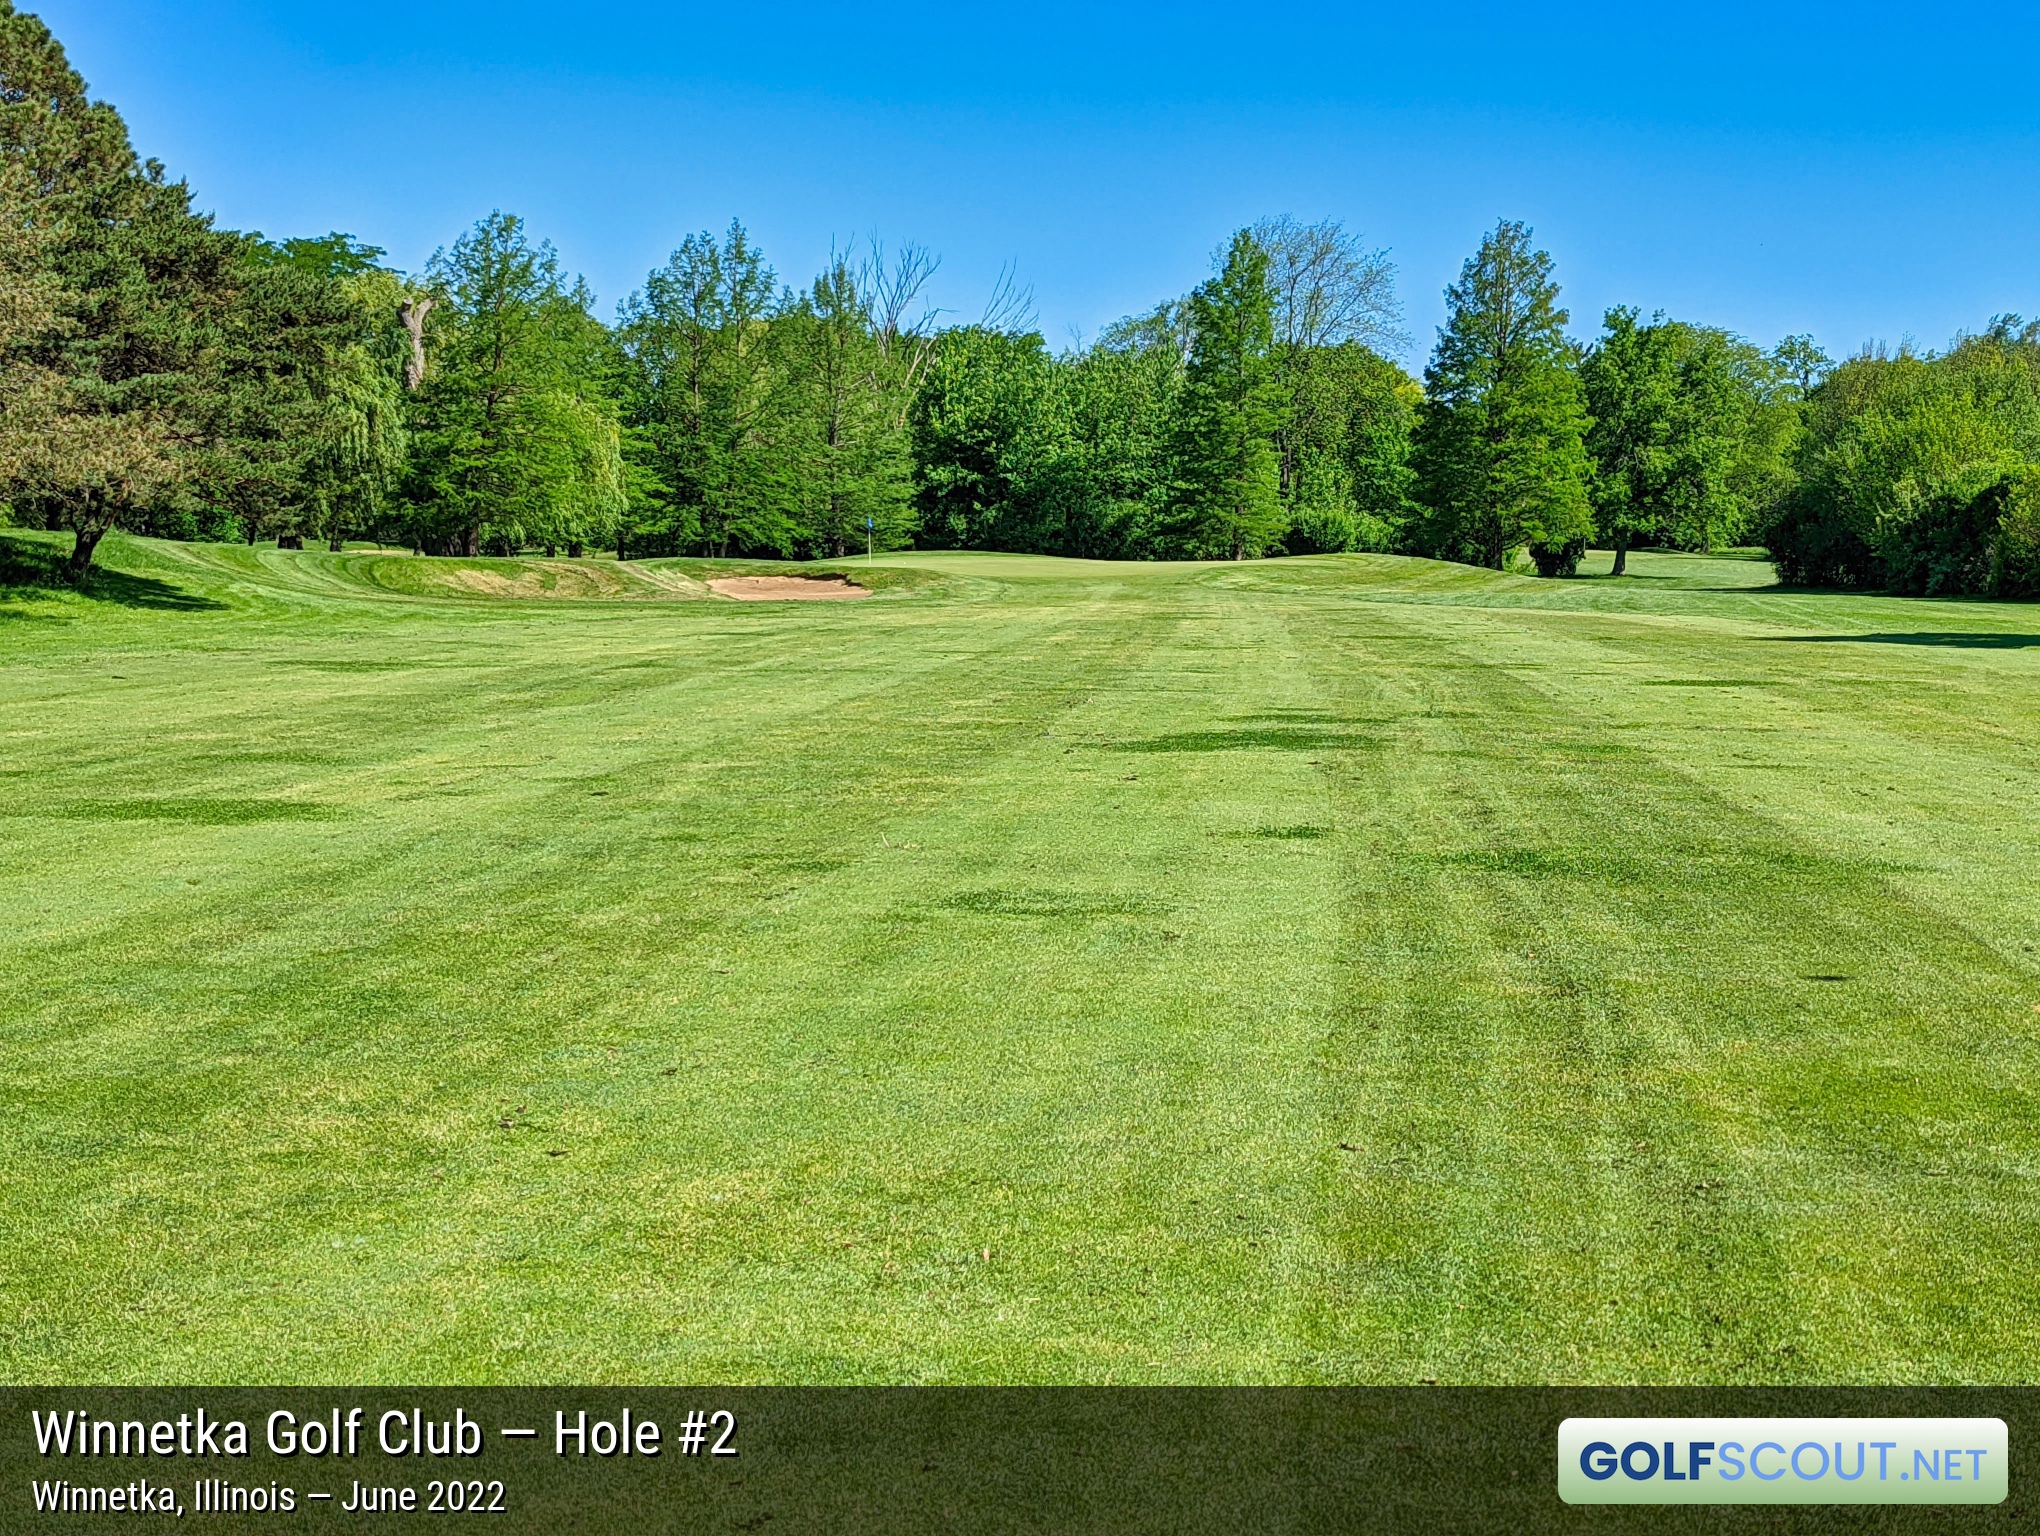 Photo of hole #2 at Winnetka Golf Club in Winnetka, Illinois. 